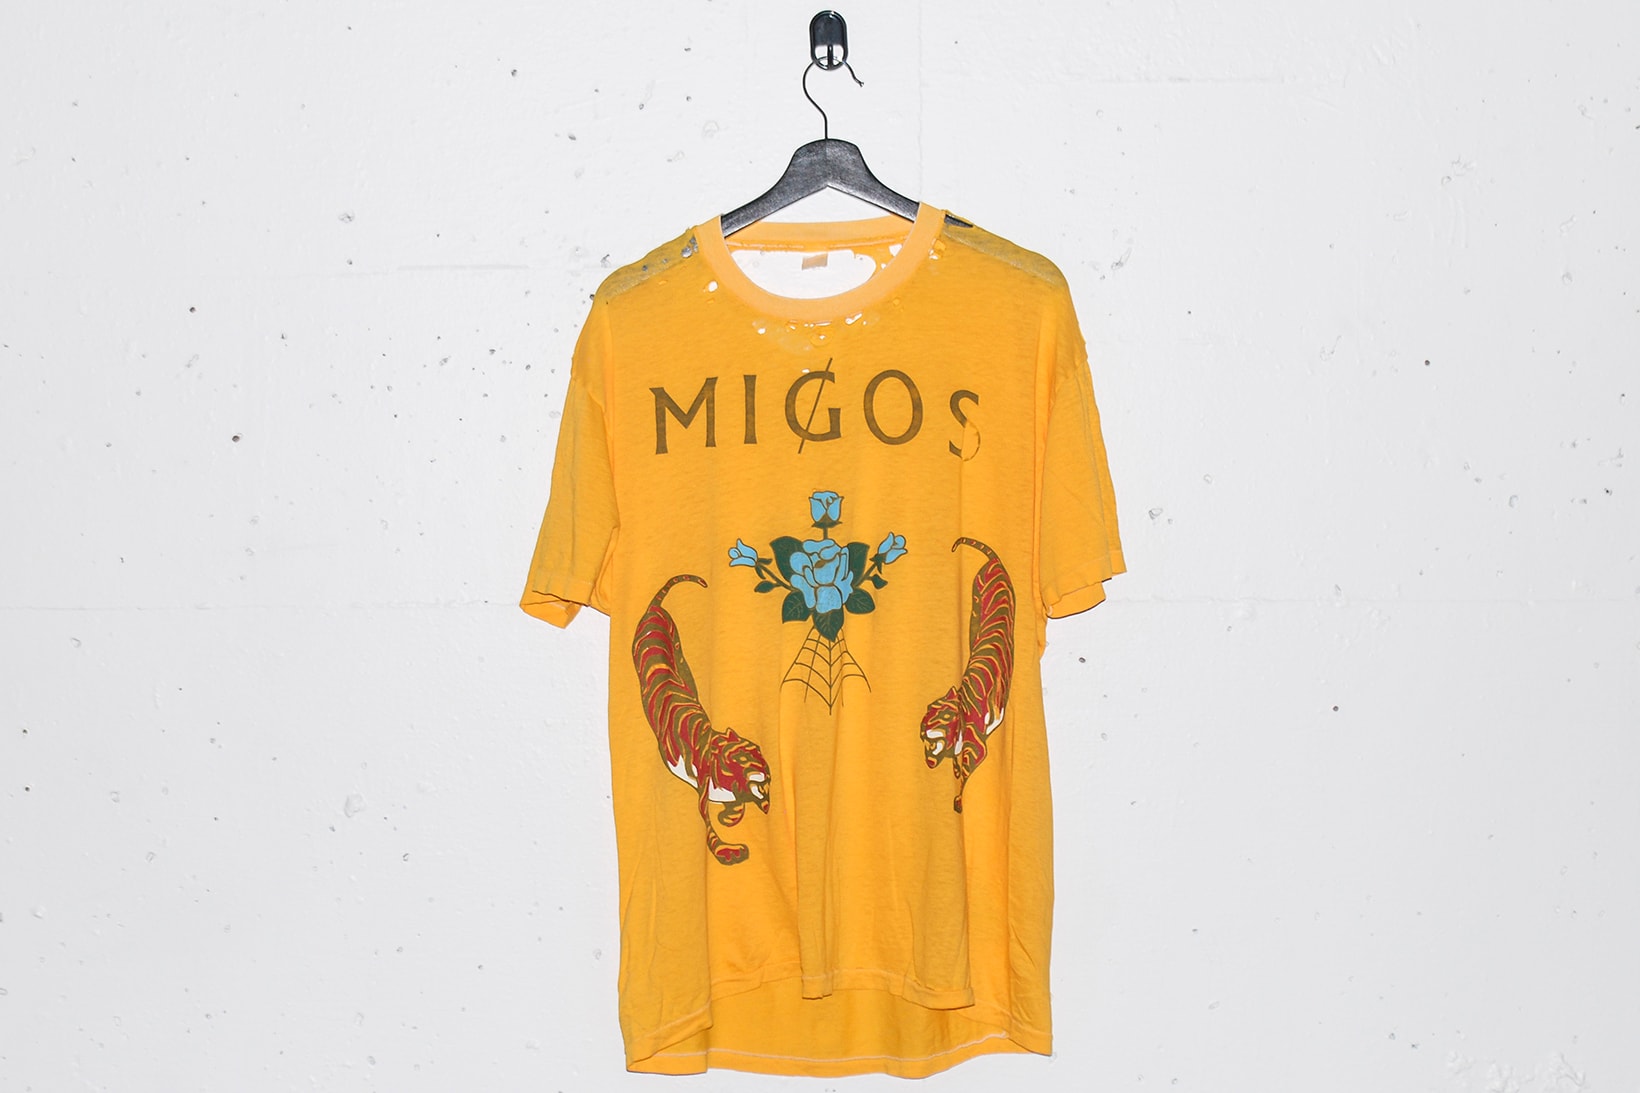 Migos Saint Luis RSVP Gallery culture II 2 vintage custom merch exclusive pop up shirts graphics blanks prints